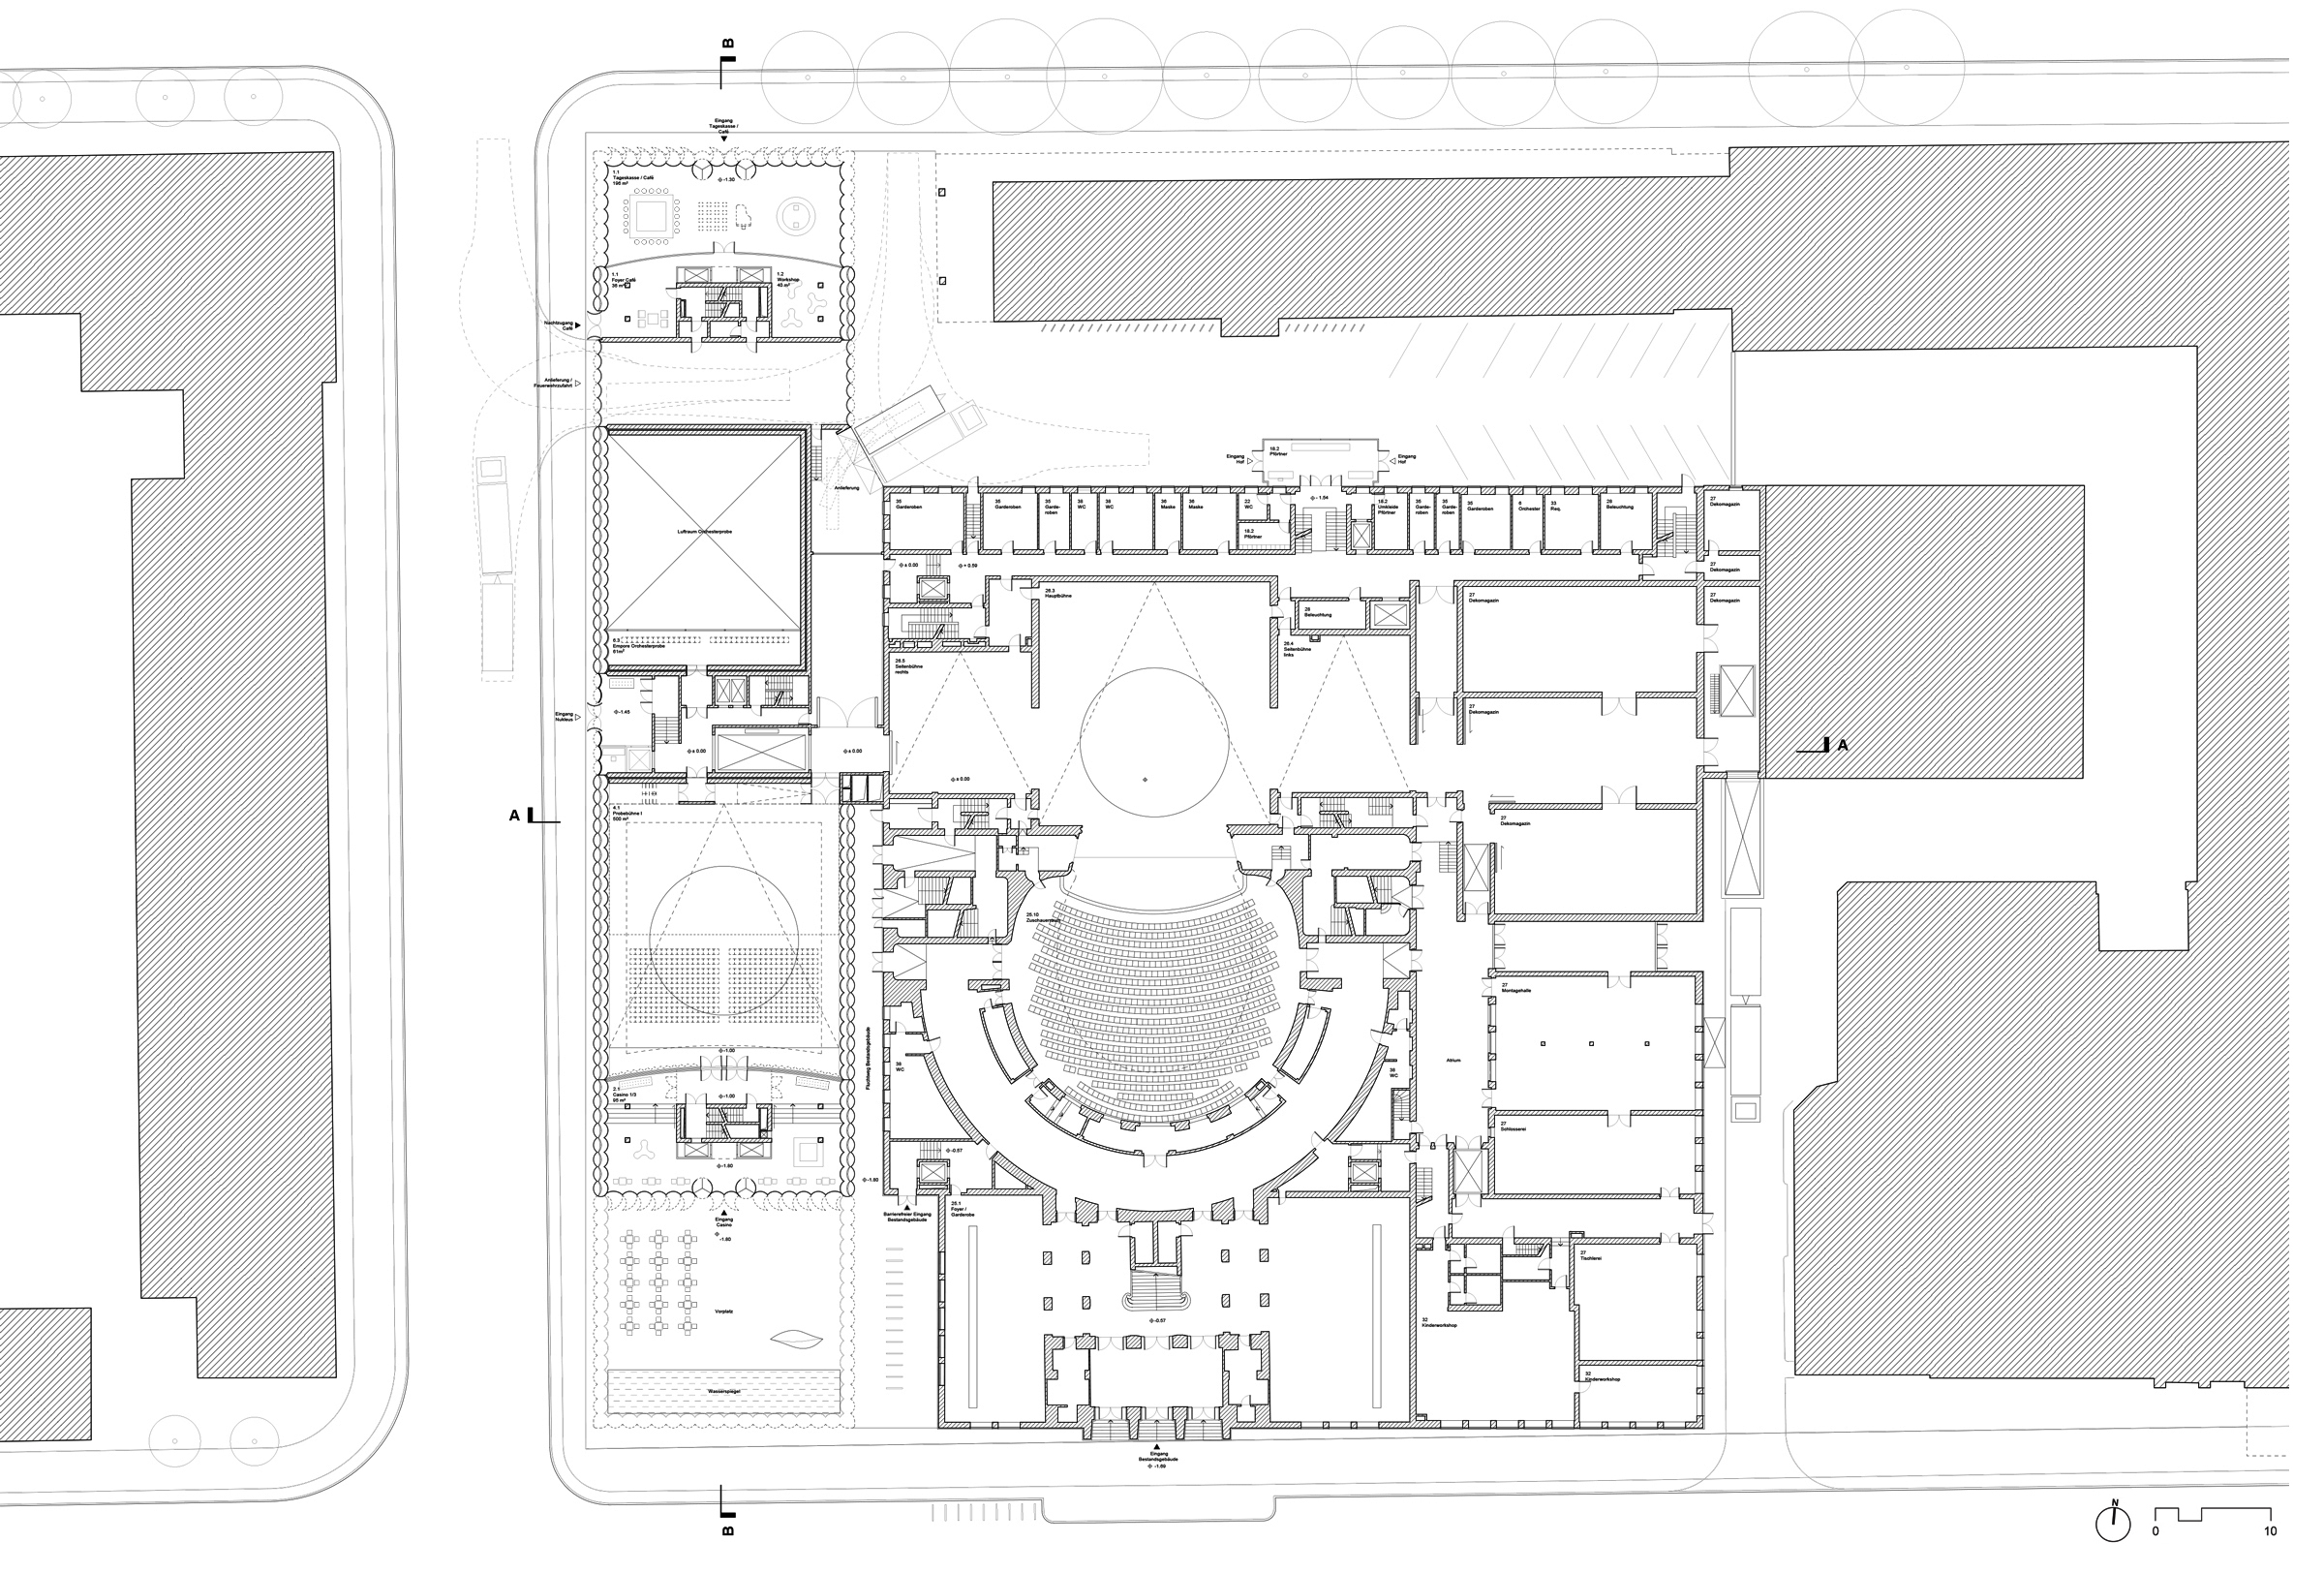 Ground level plan of the Komische Oper Expansion.